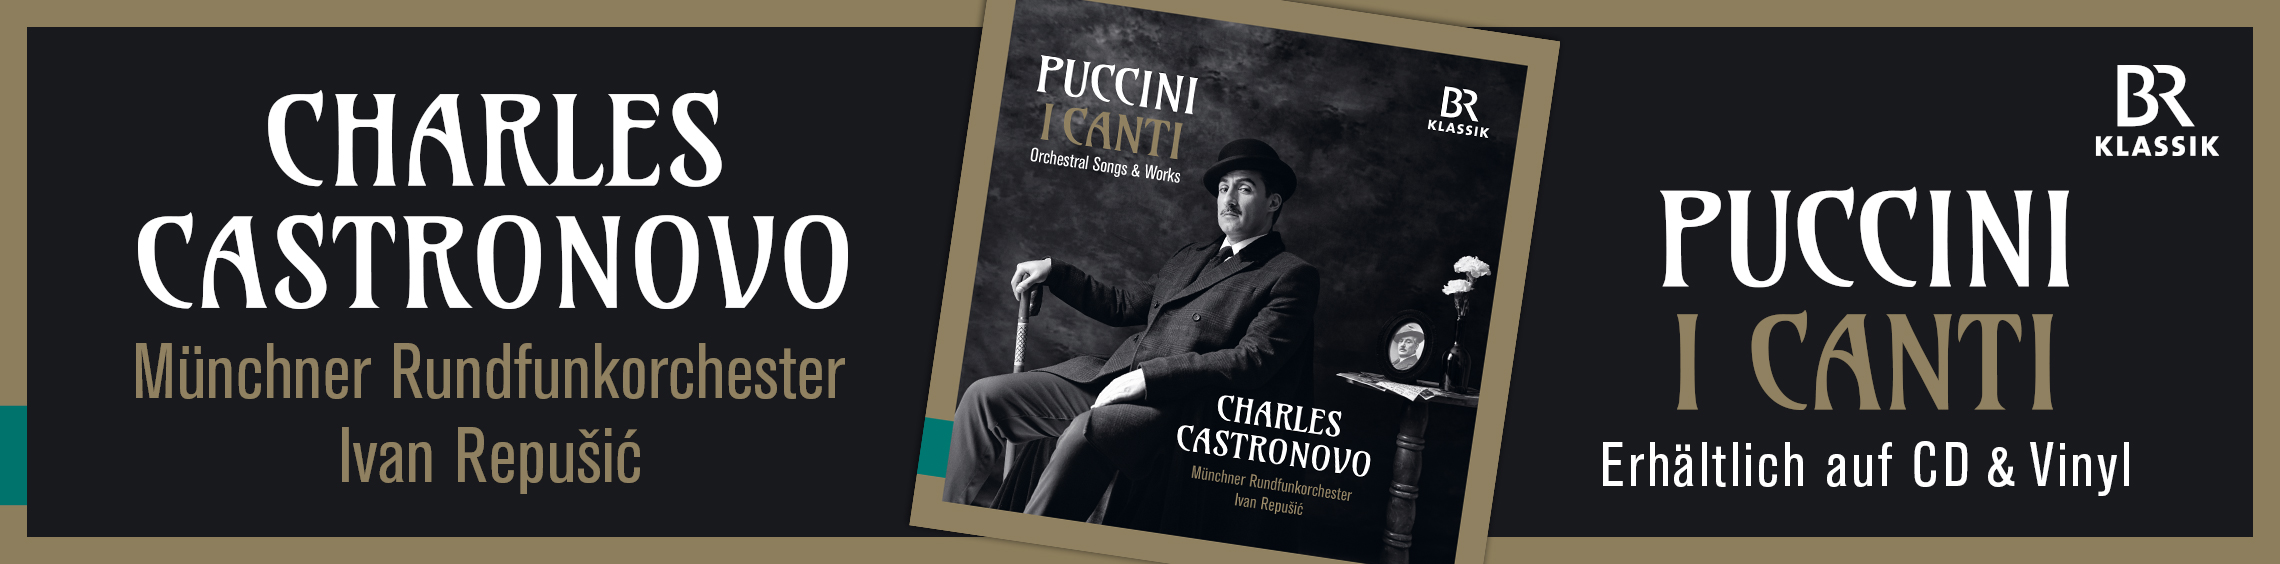 Charles Castronovo - I Canti - Puccini